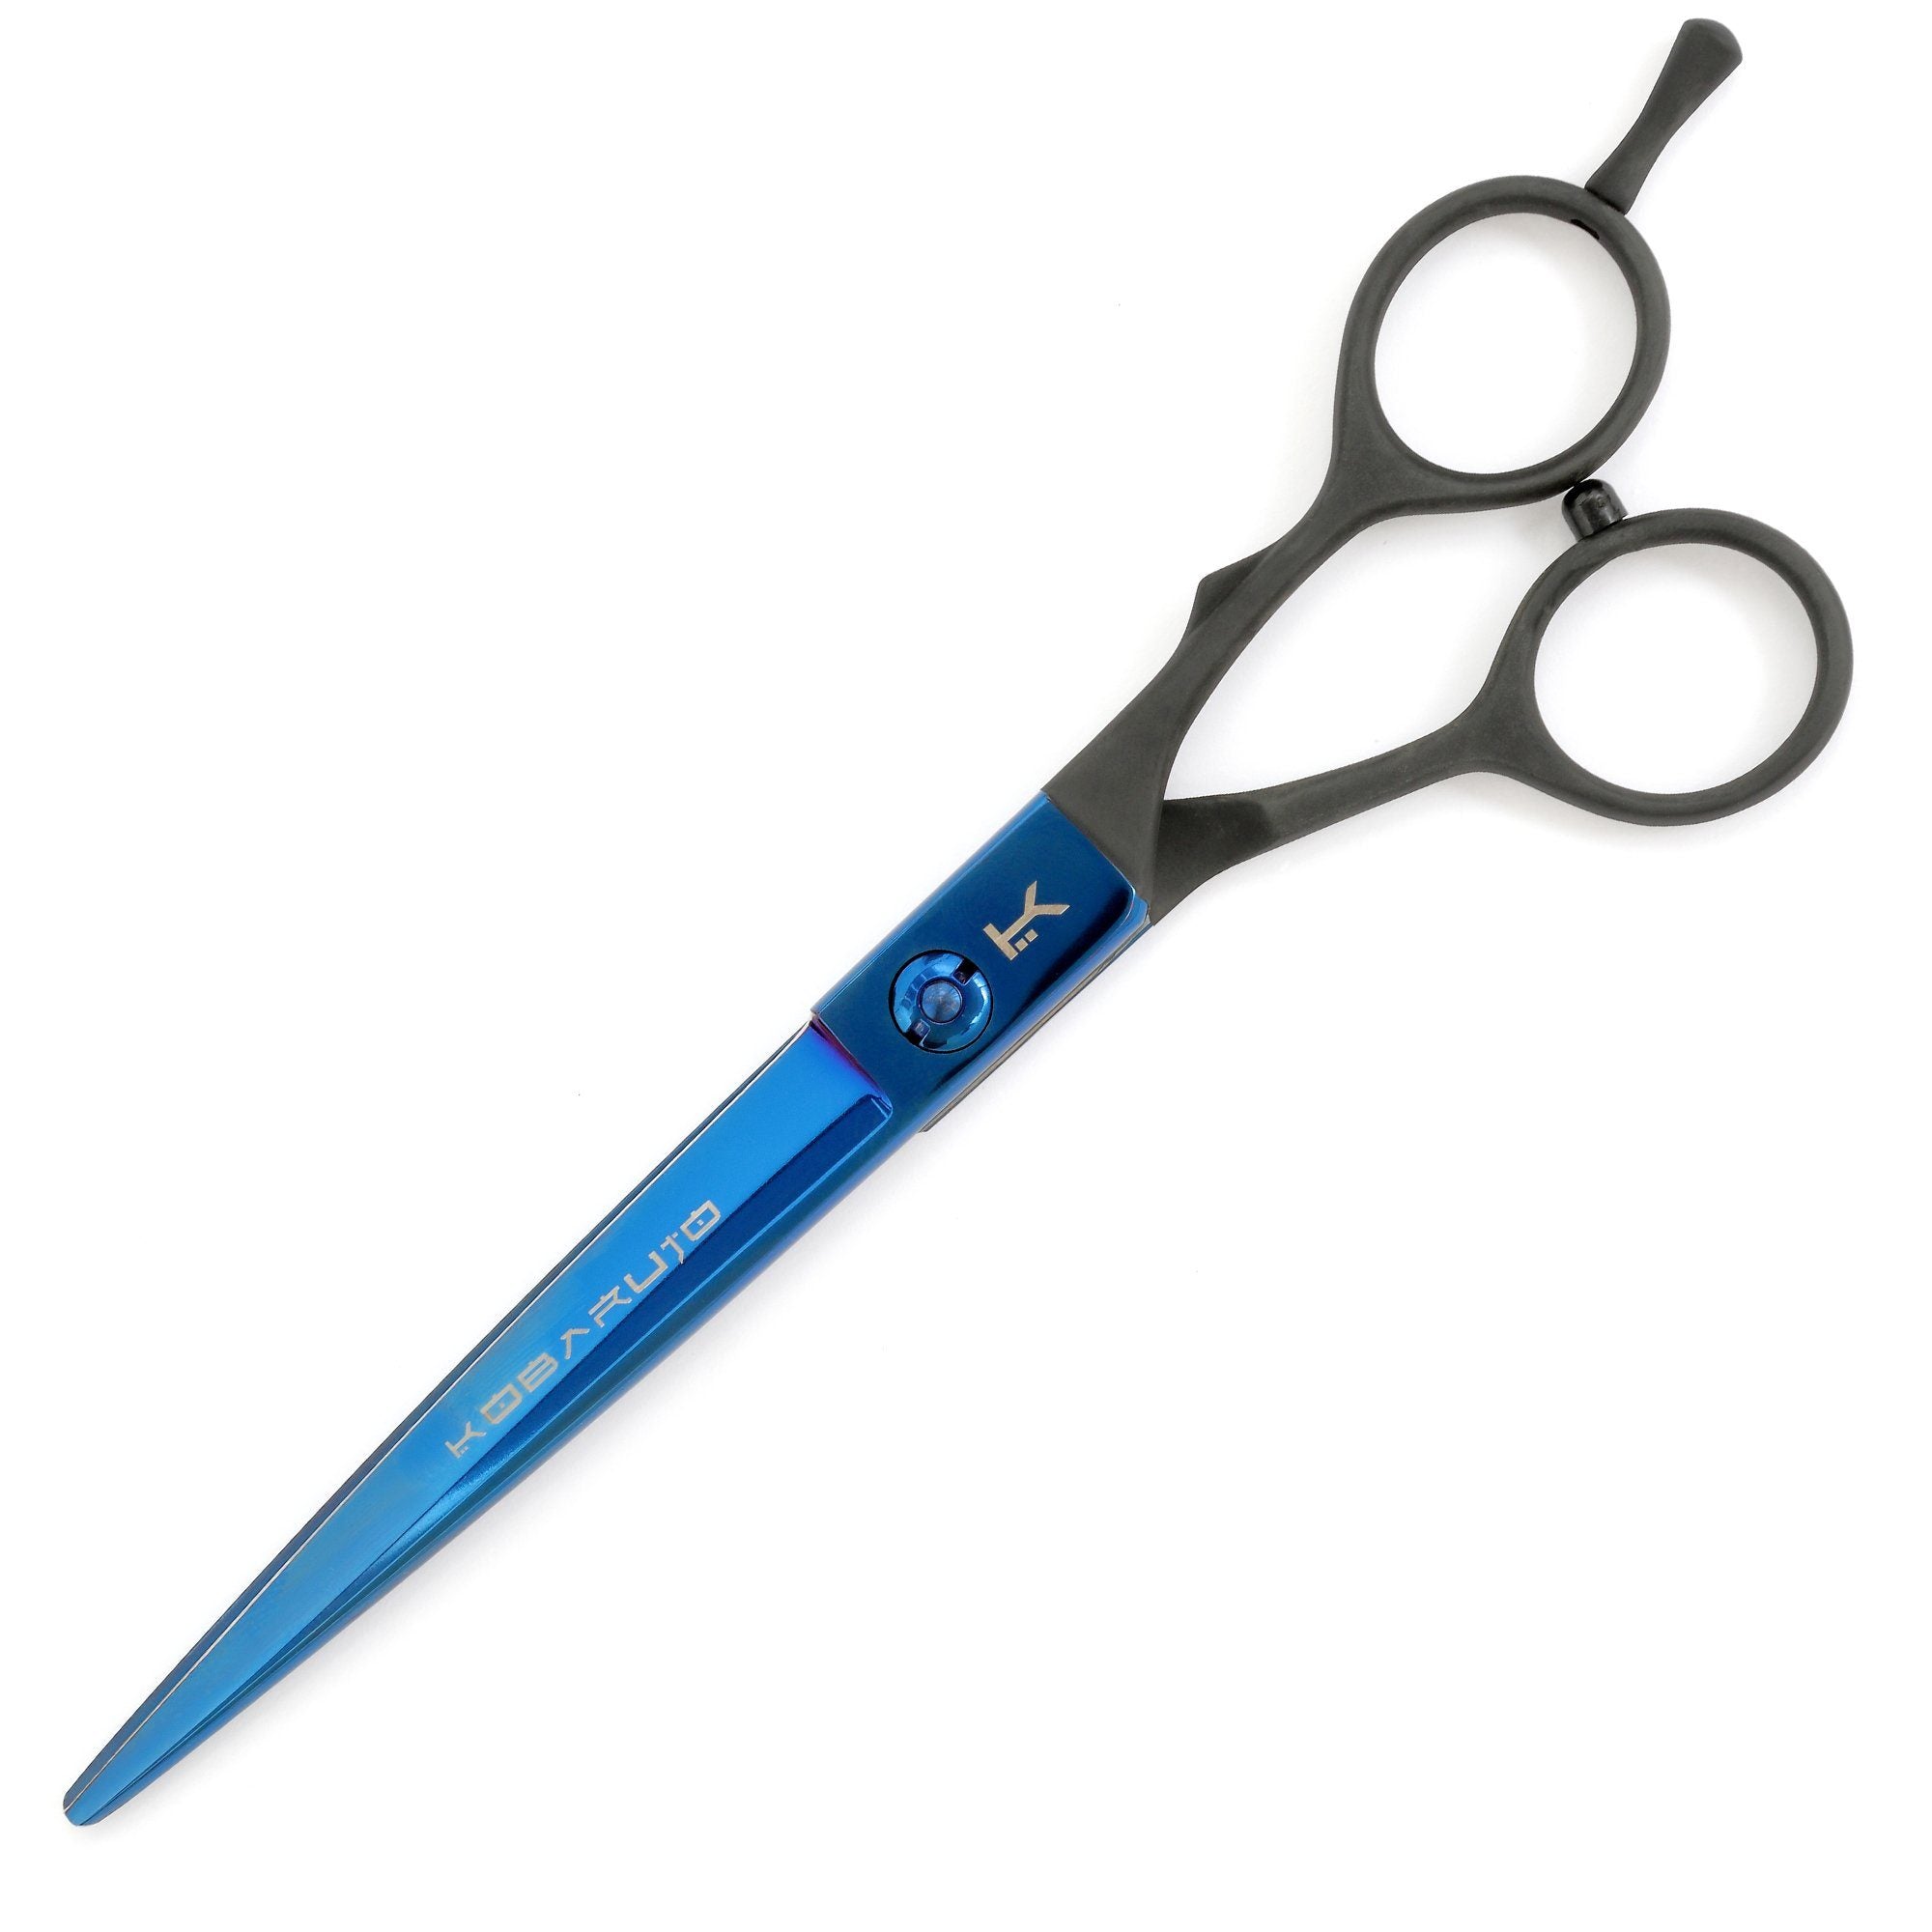 Professional Hair Shears Blue Cobalt Scissors 7 inch - Beauty Hair Products Ltd